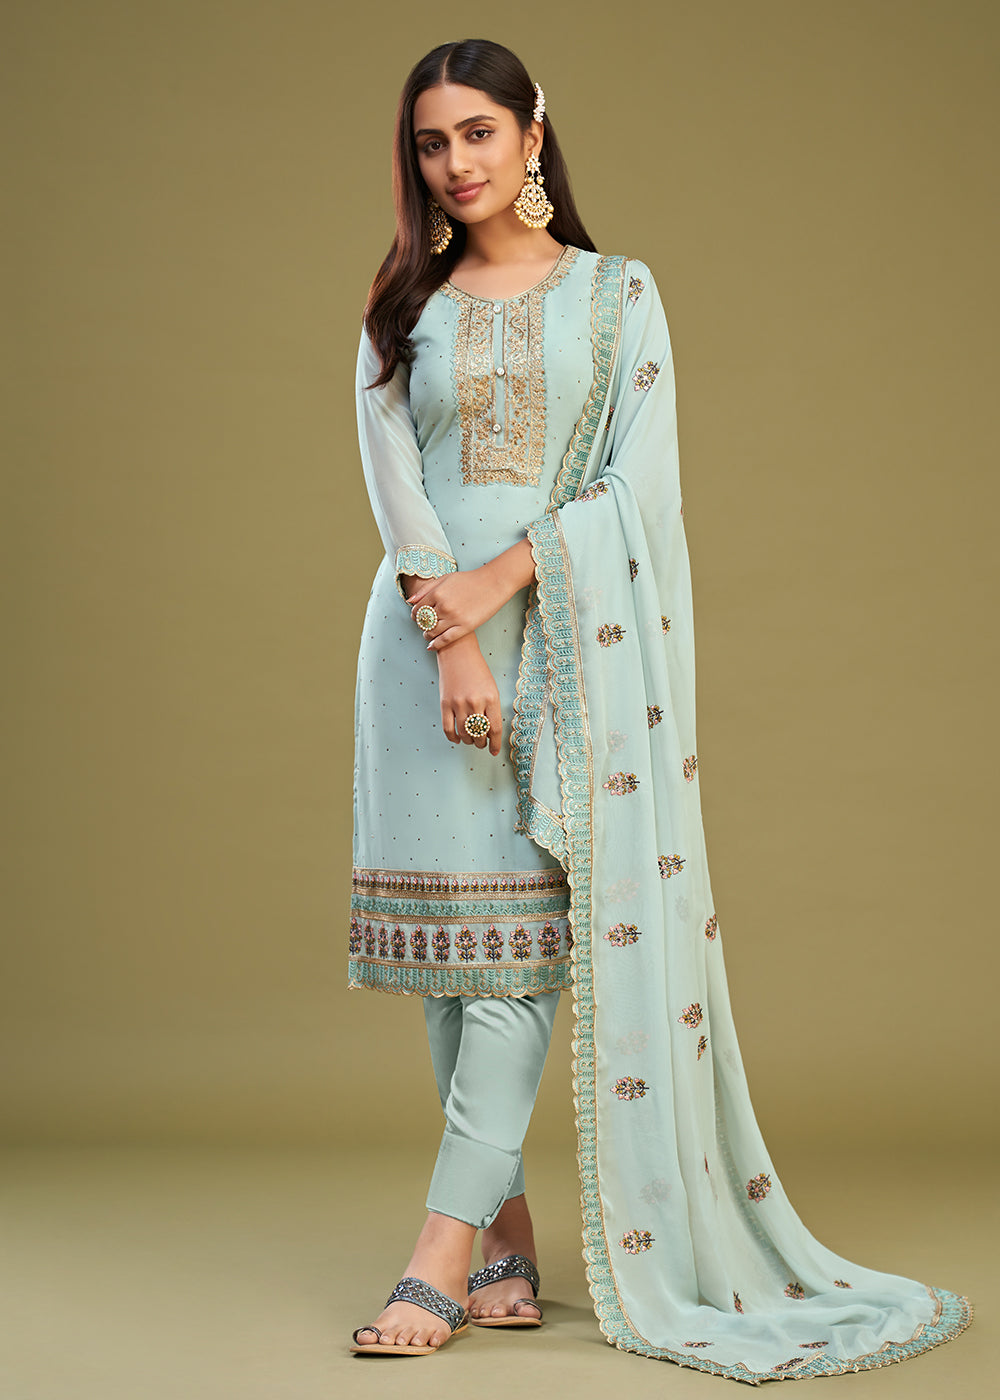 Buy Now Ice Blue Swarovski Work & Embroidered Eid Wear Salwar Suit Online in USA, UK, Canada, Germany, Australia & Worldwide at Empress Clothing. 